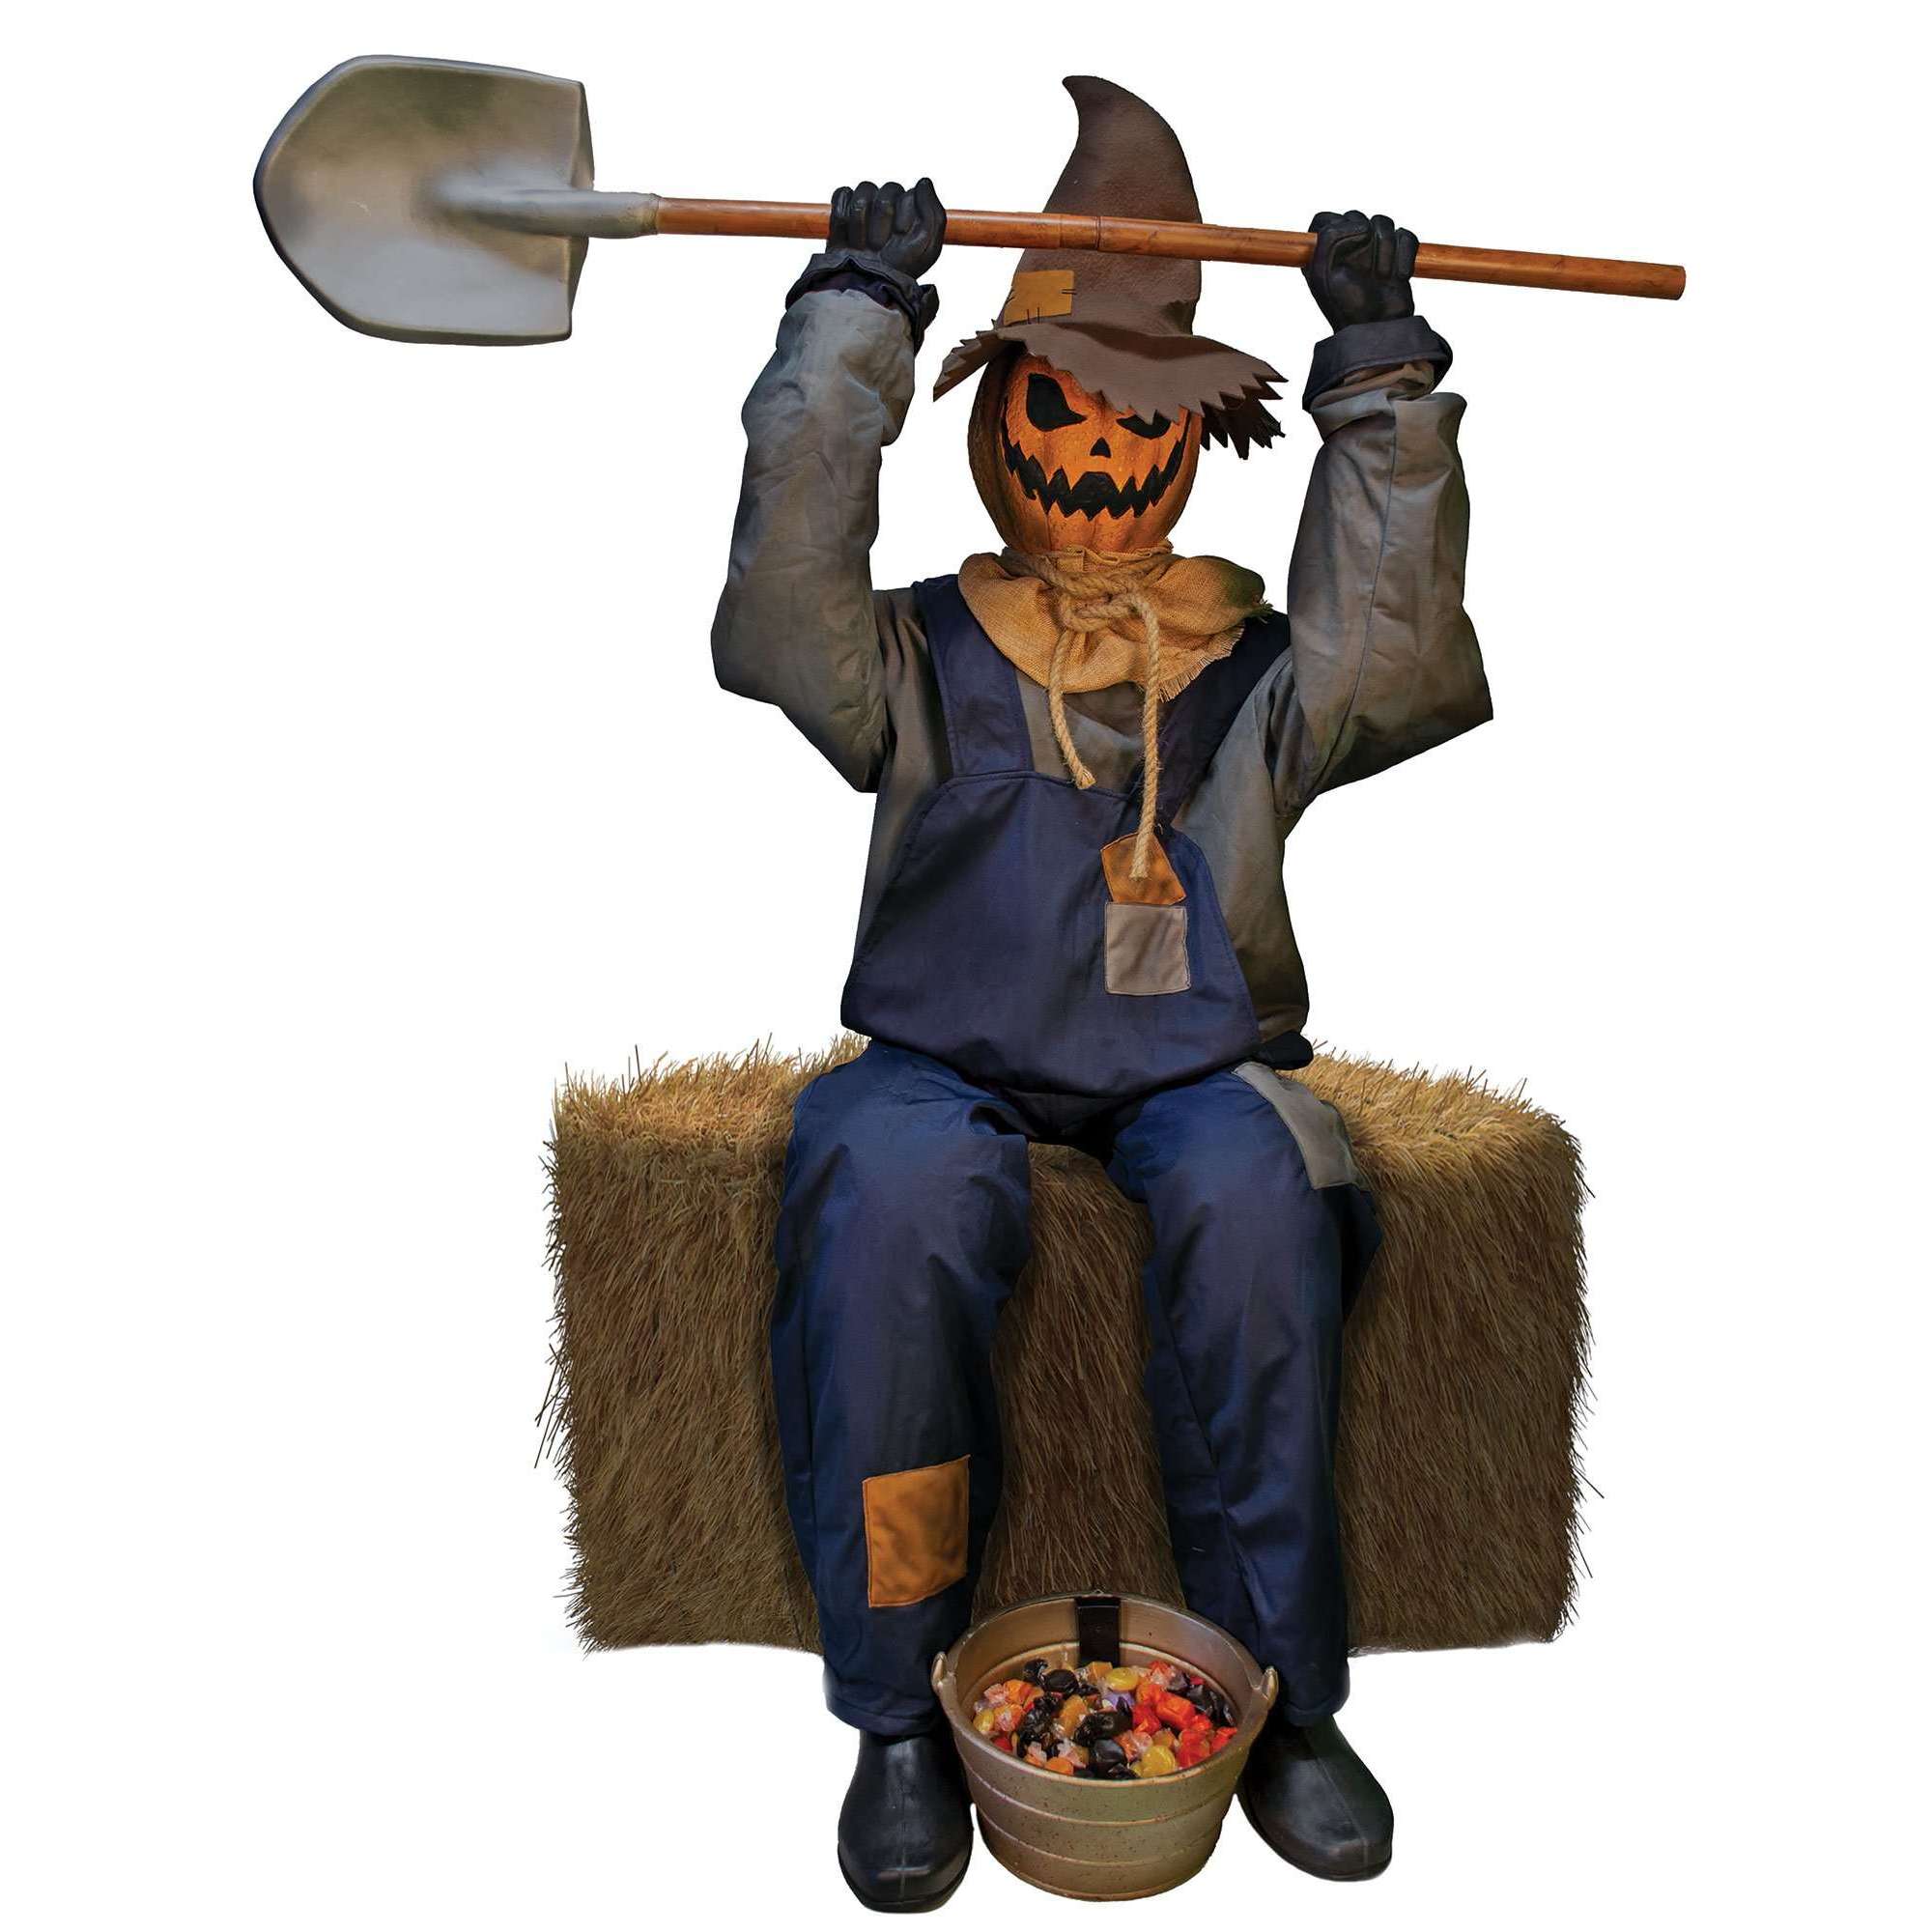 Jack Goodies Guardian Animated Laughing Pumpkin Scarecrow Prop